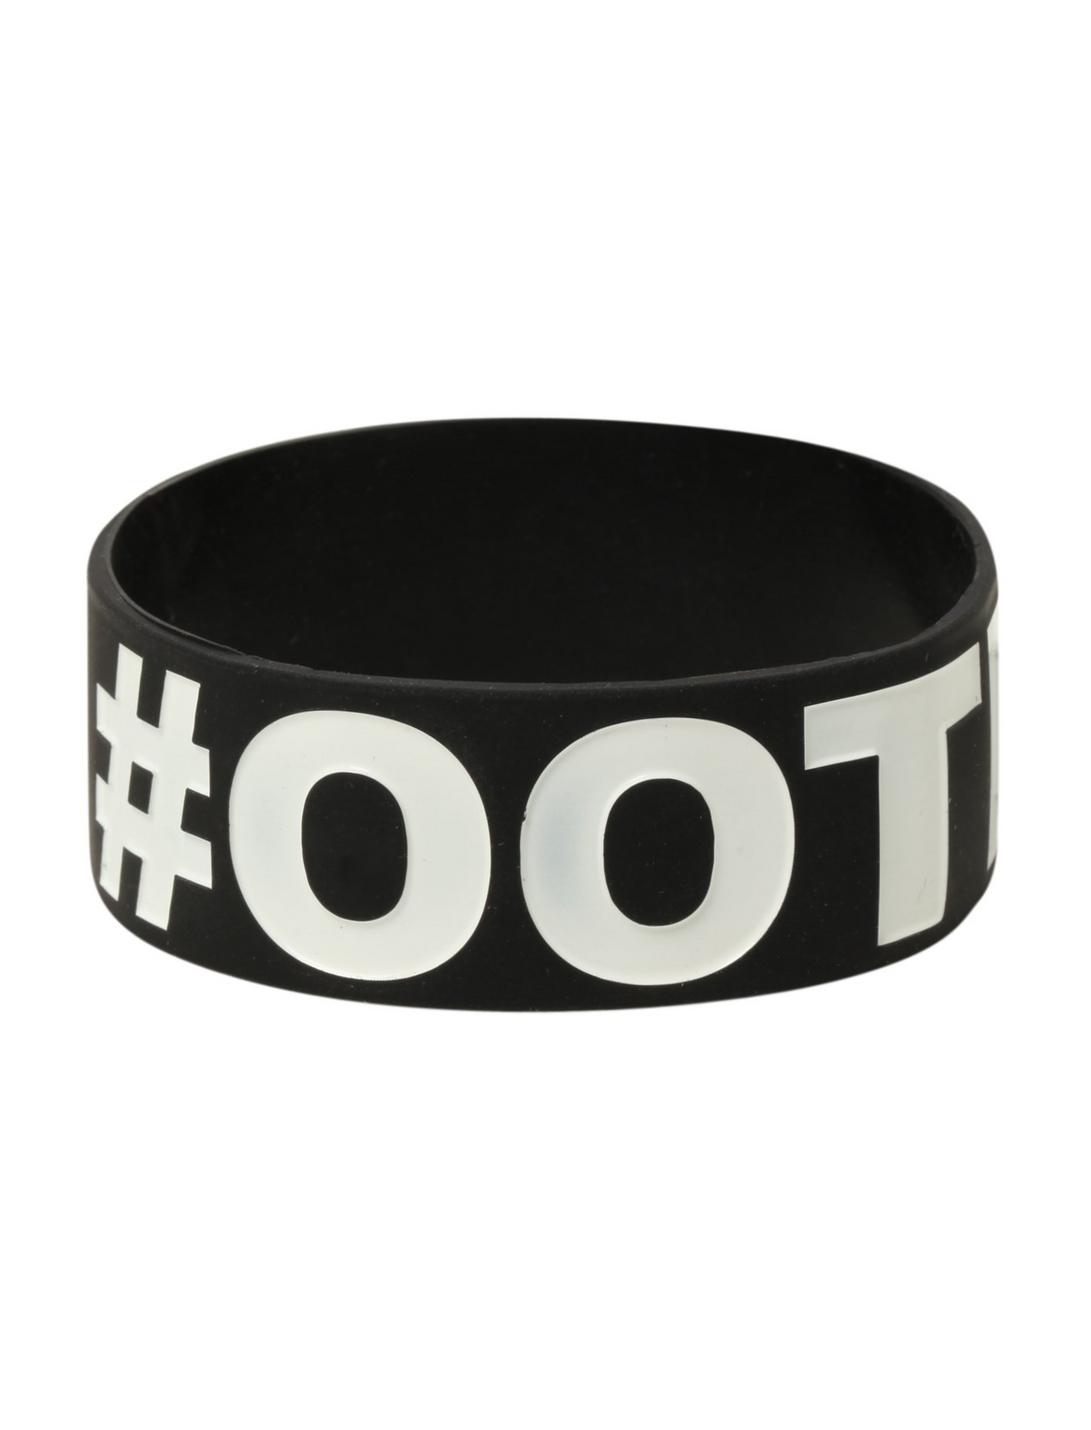 Hashtag OOTD Rubber Bracelet, , hi-res